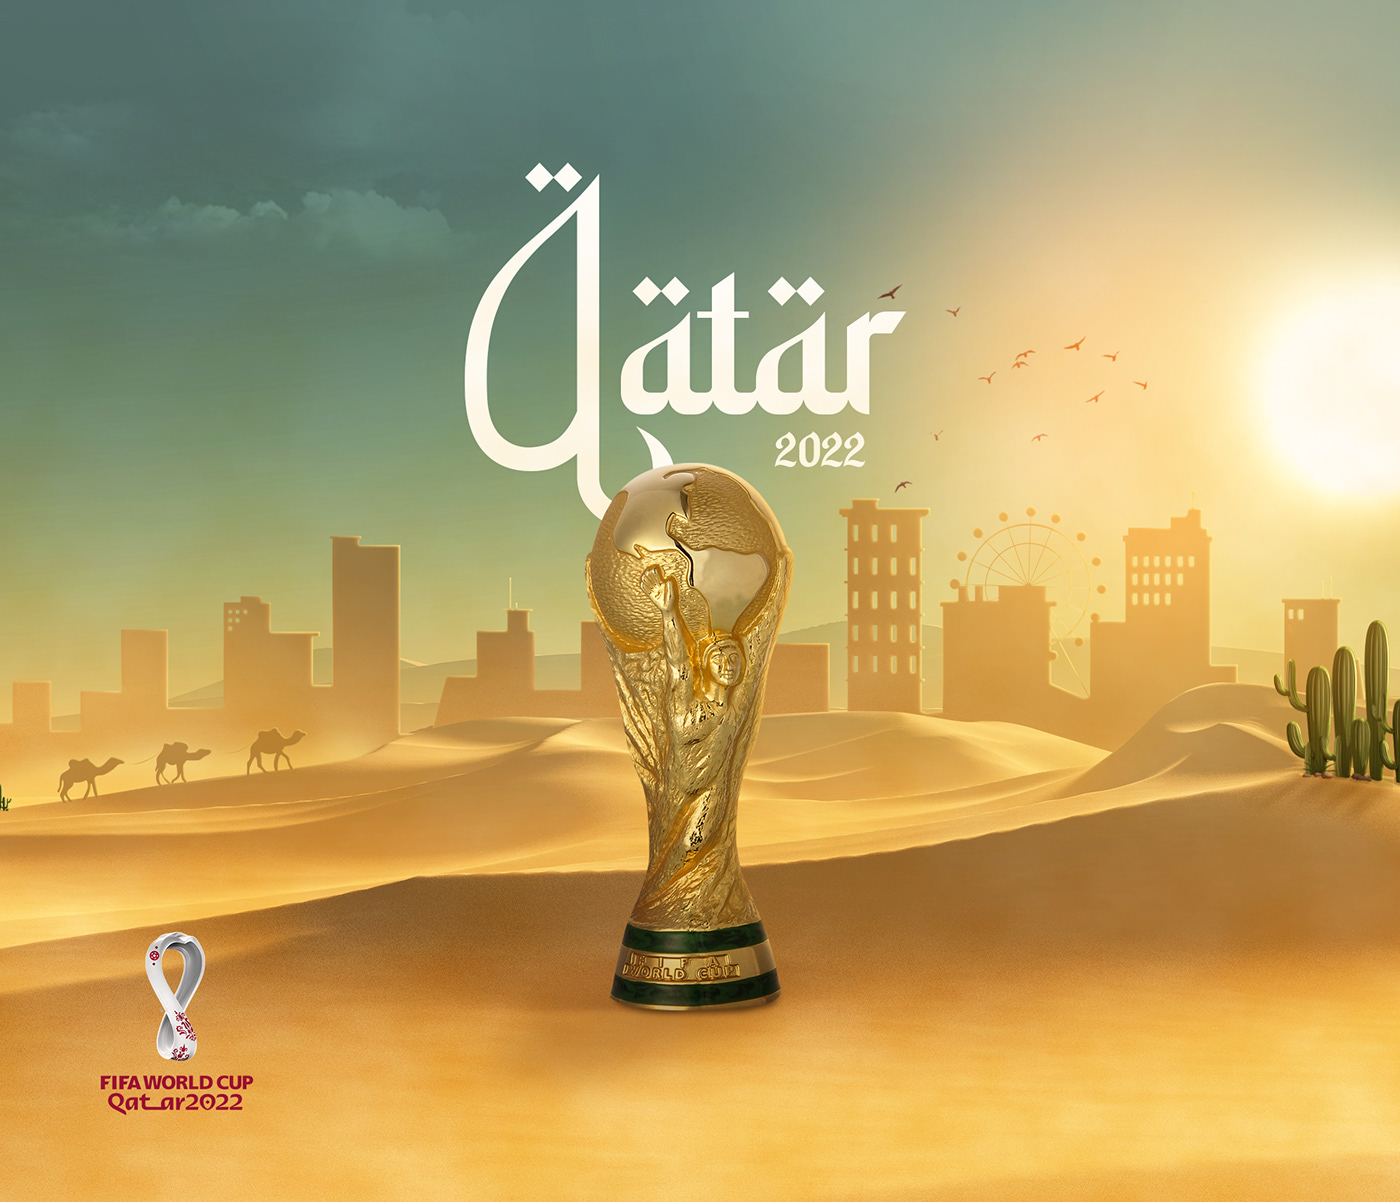 Adobe Photoshop football graphic design  Image manipulation photo editing Qatar Qatar 2022 Social media post Socialmedia world cup